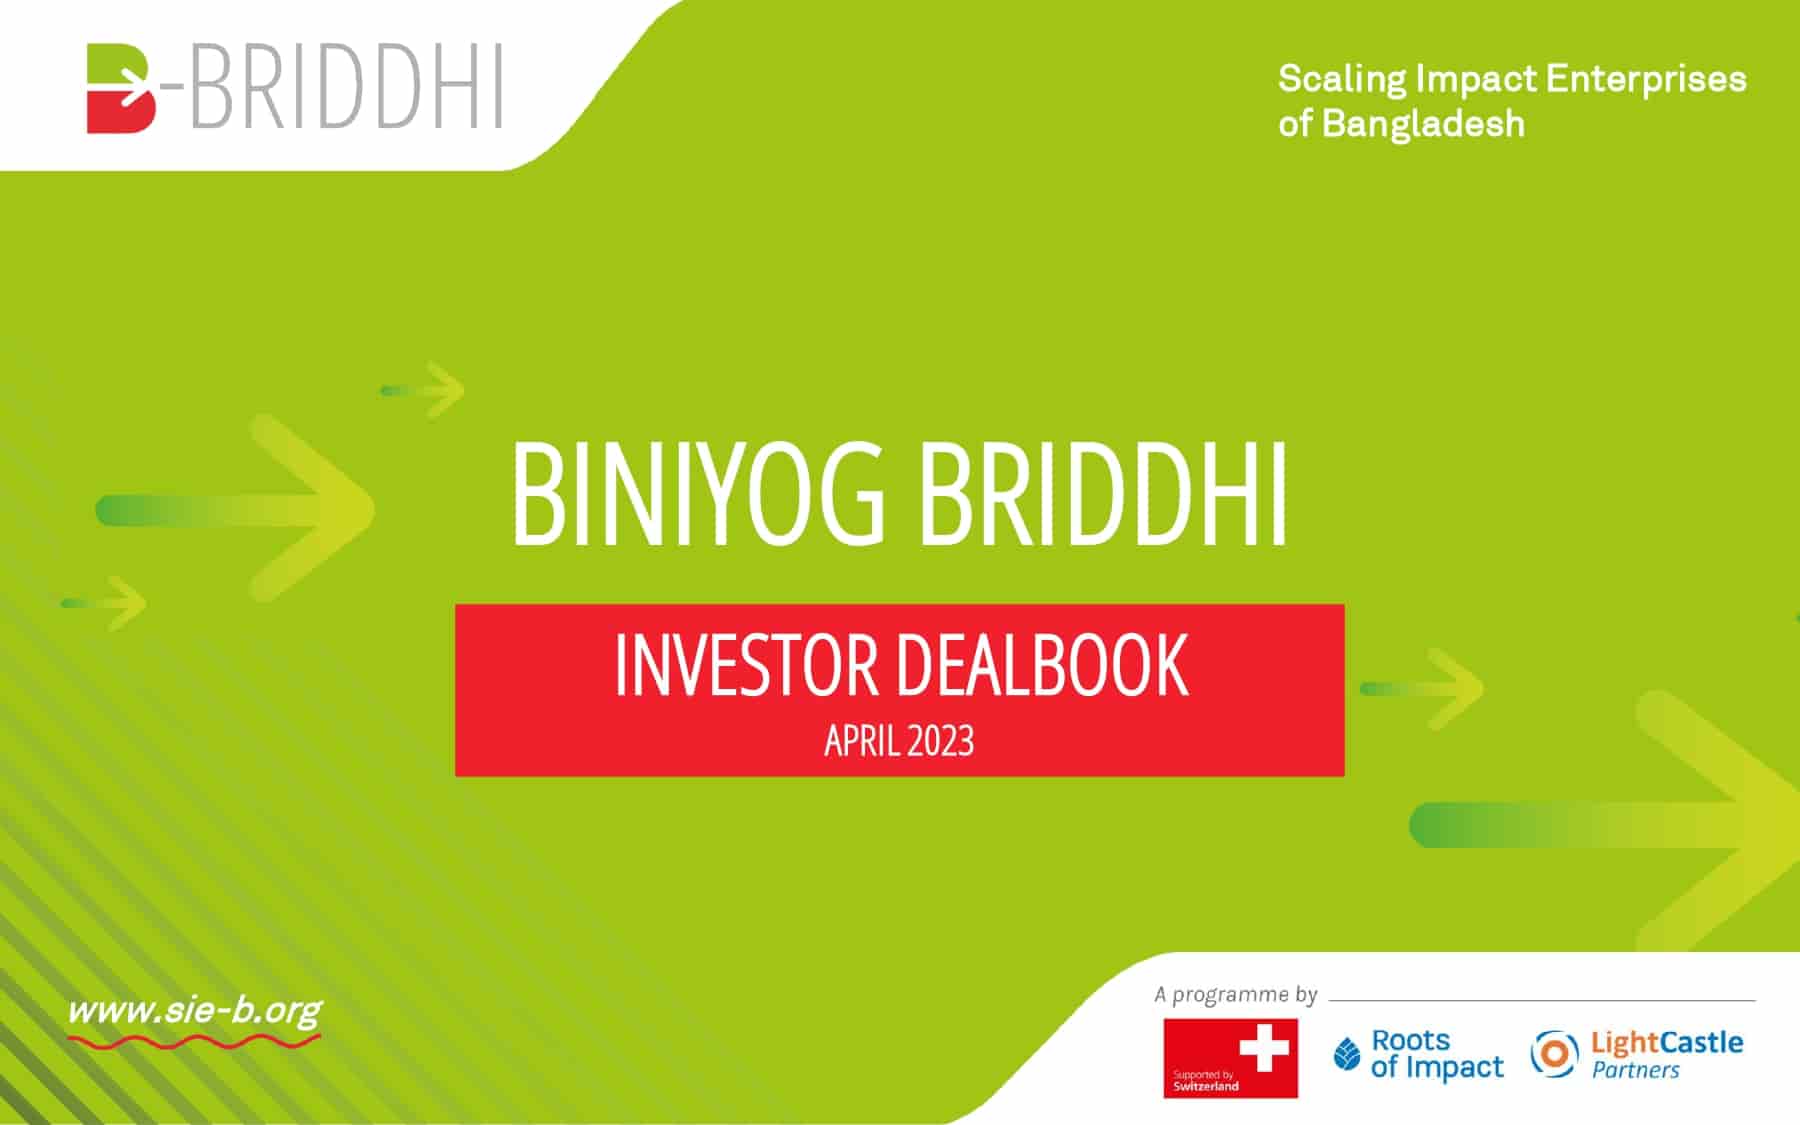 Biniyog Briddhi Investor Dealbook 2023